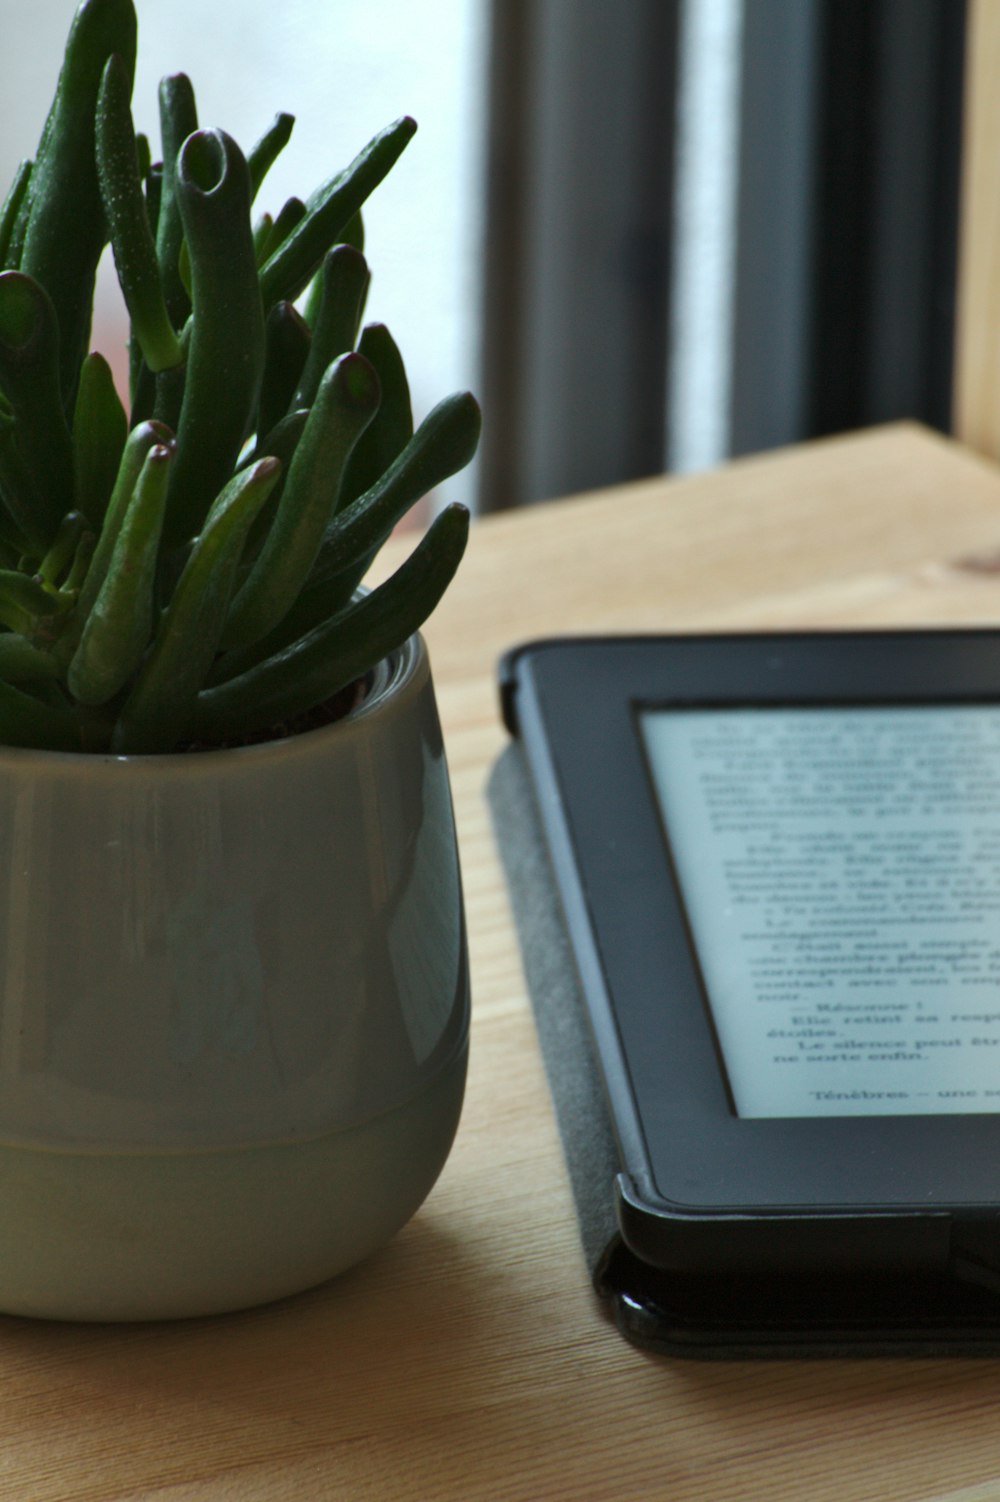 black e book reader beside green cactus plant